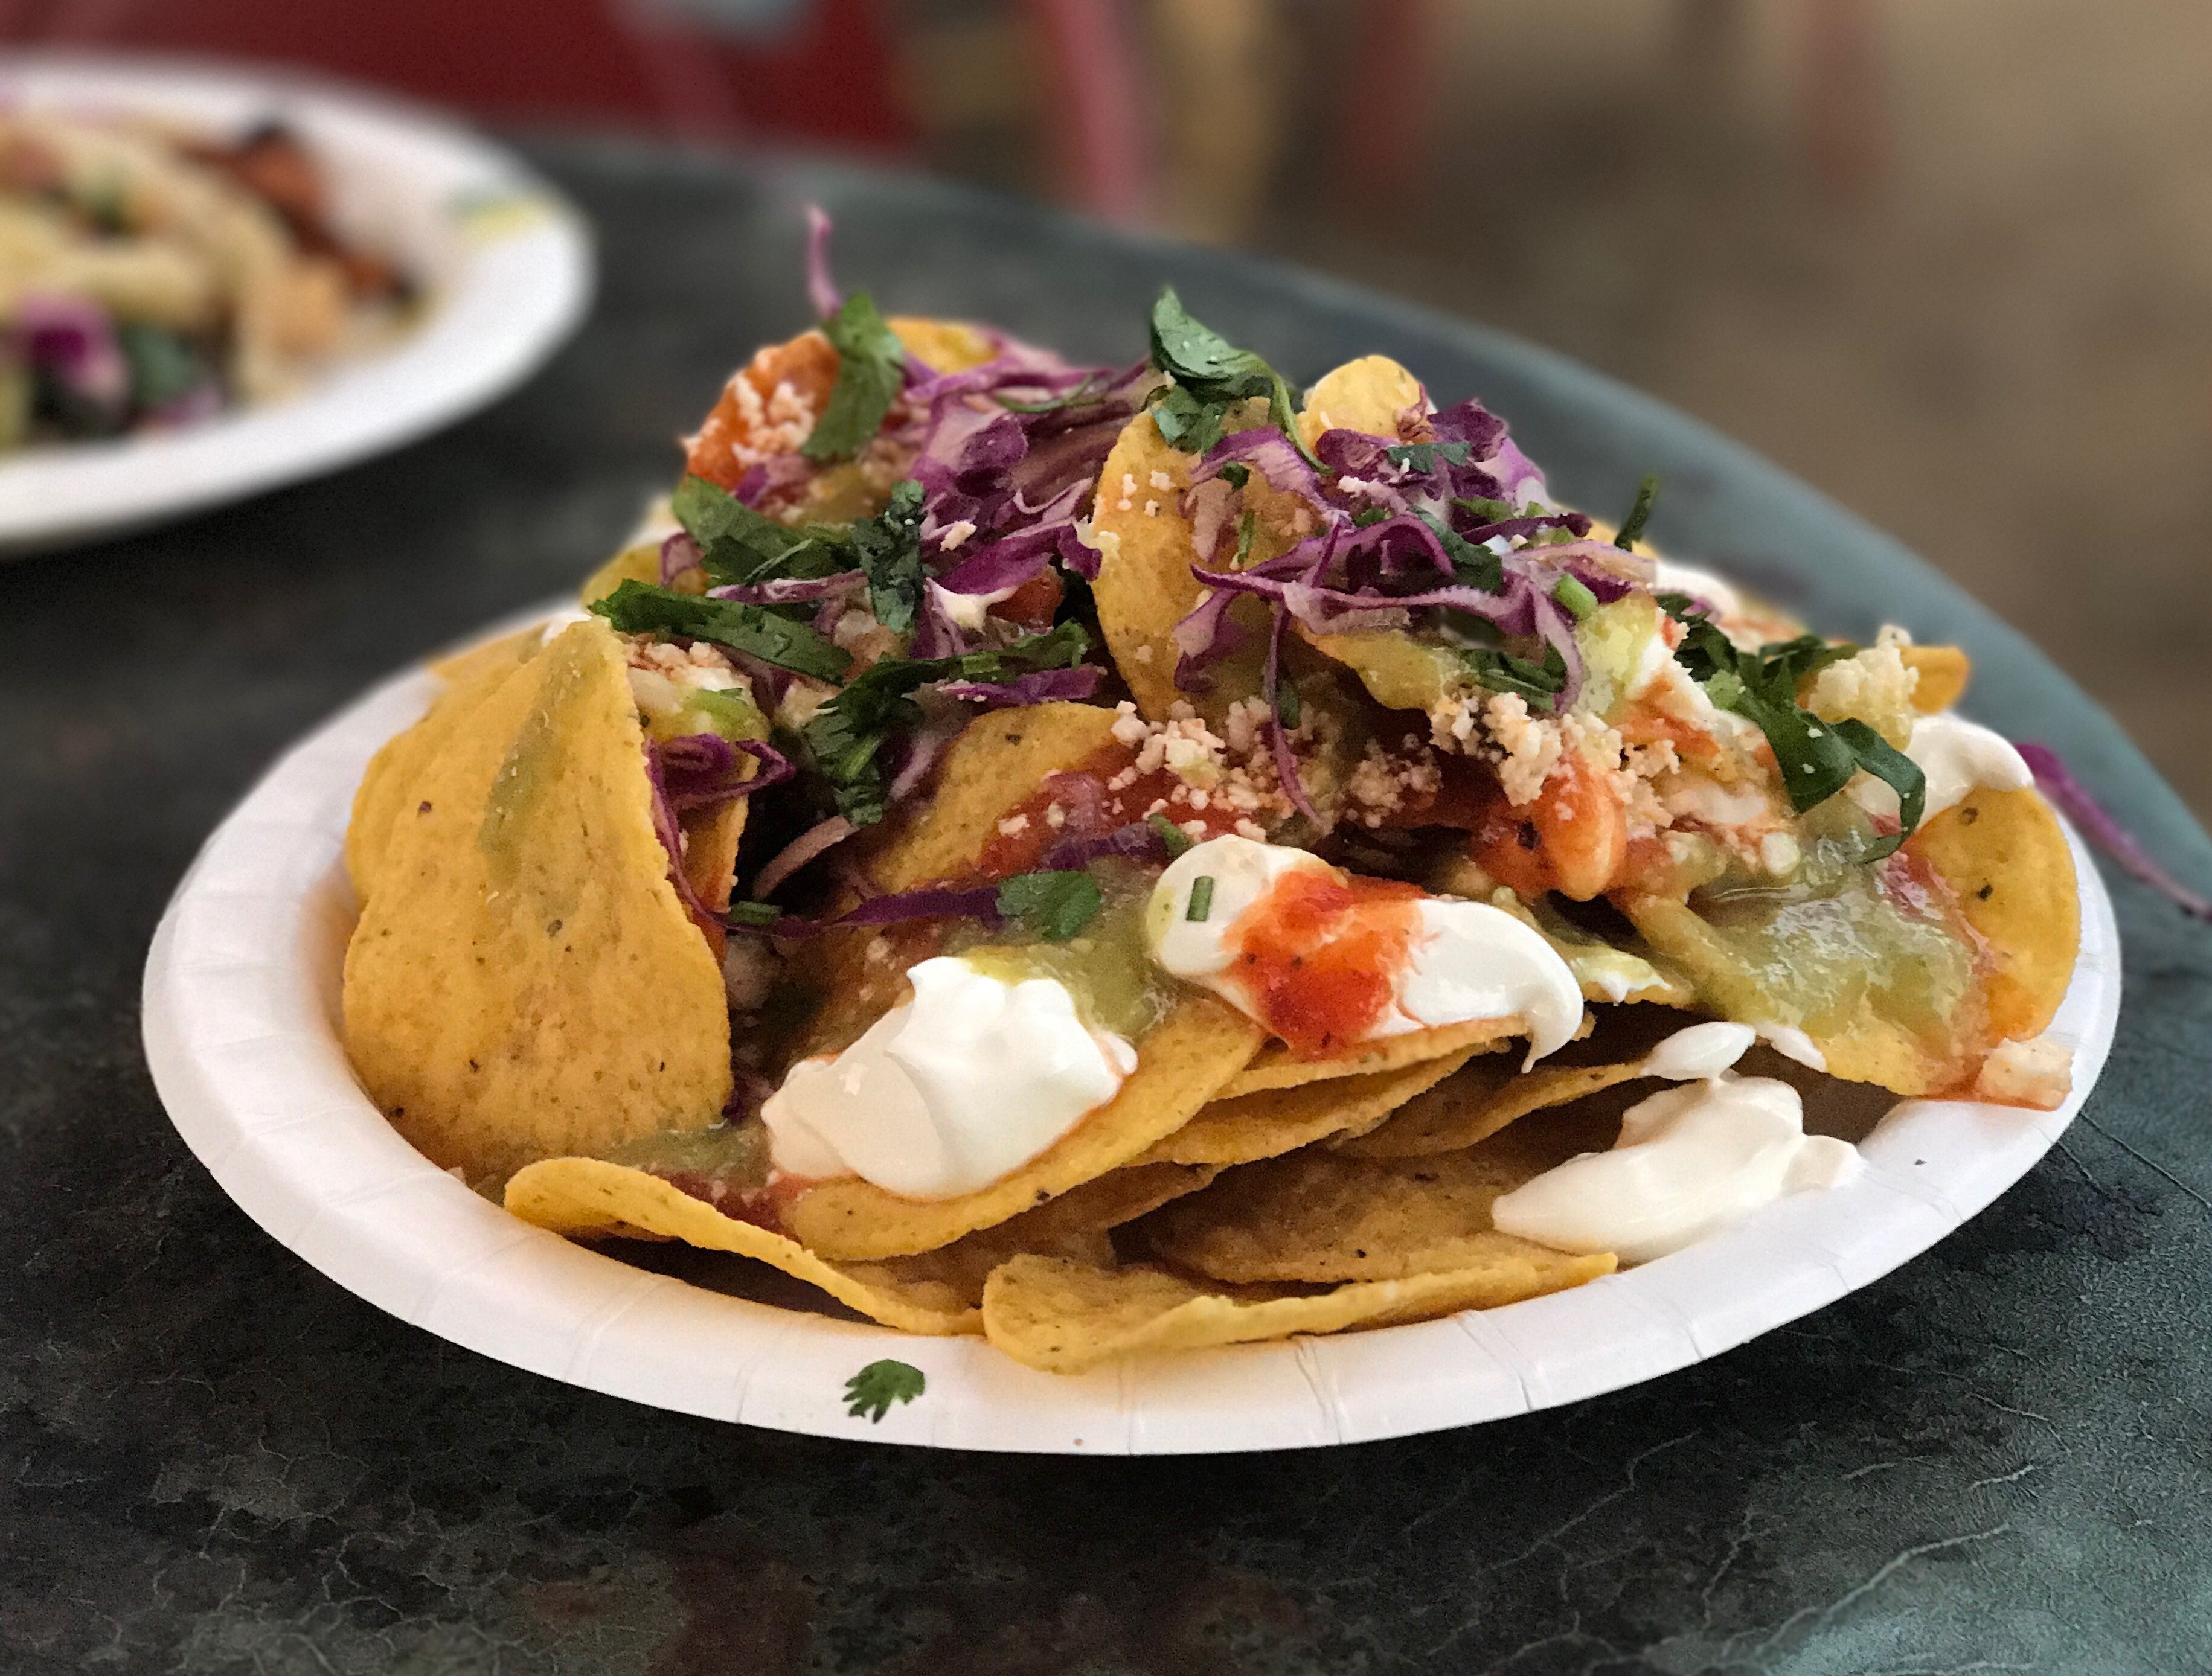 La Botana Taco Bar Food Truck Brings Stellar Tacos to Dallas Streets ...